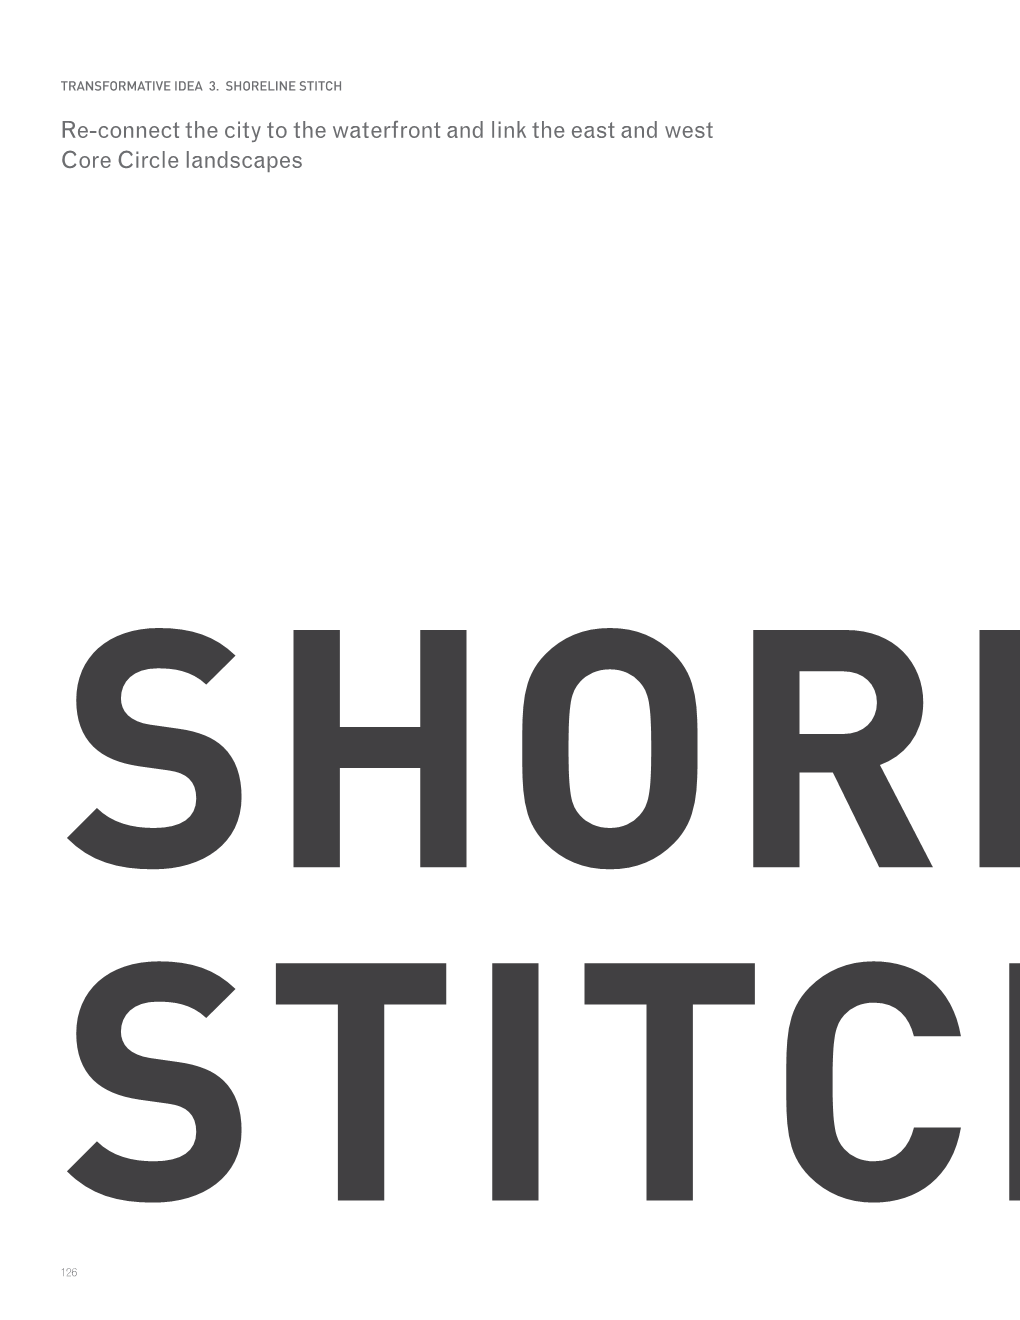 Shoreline Stitch